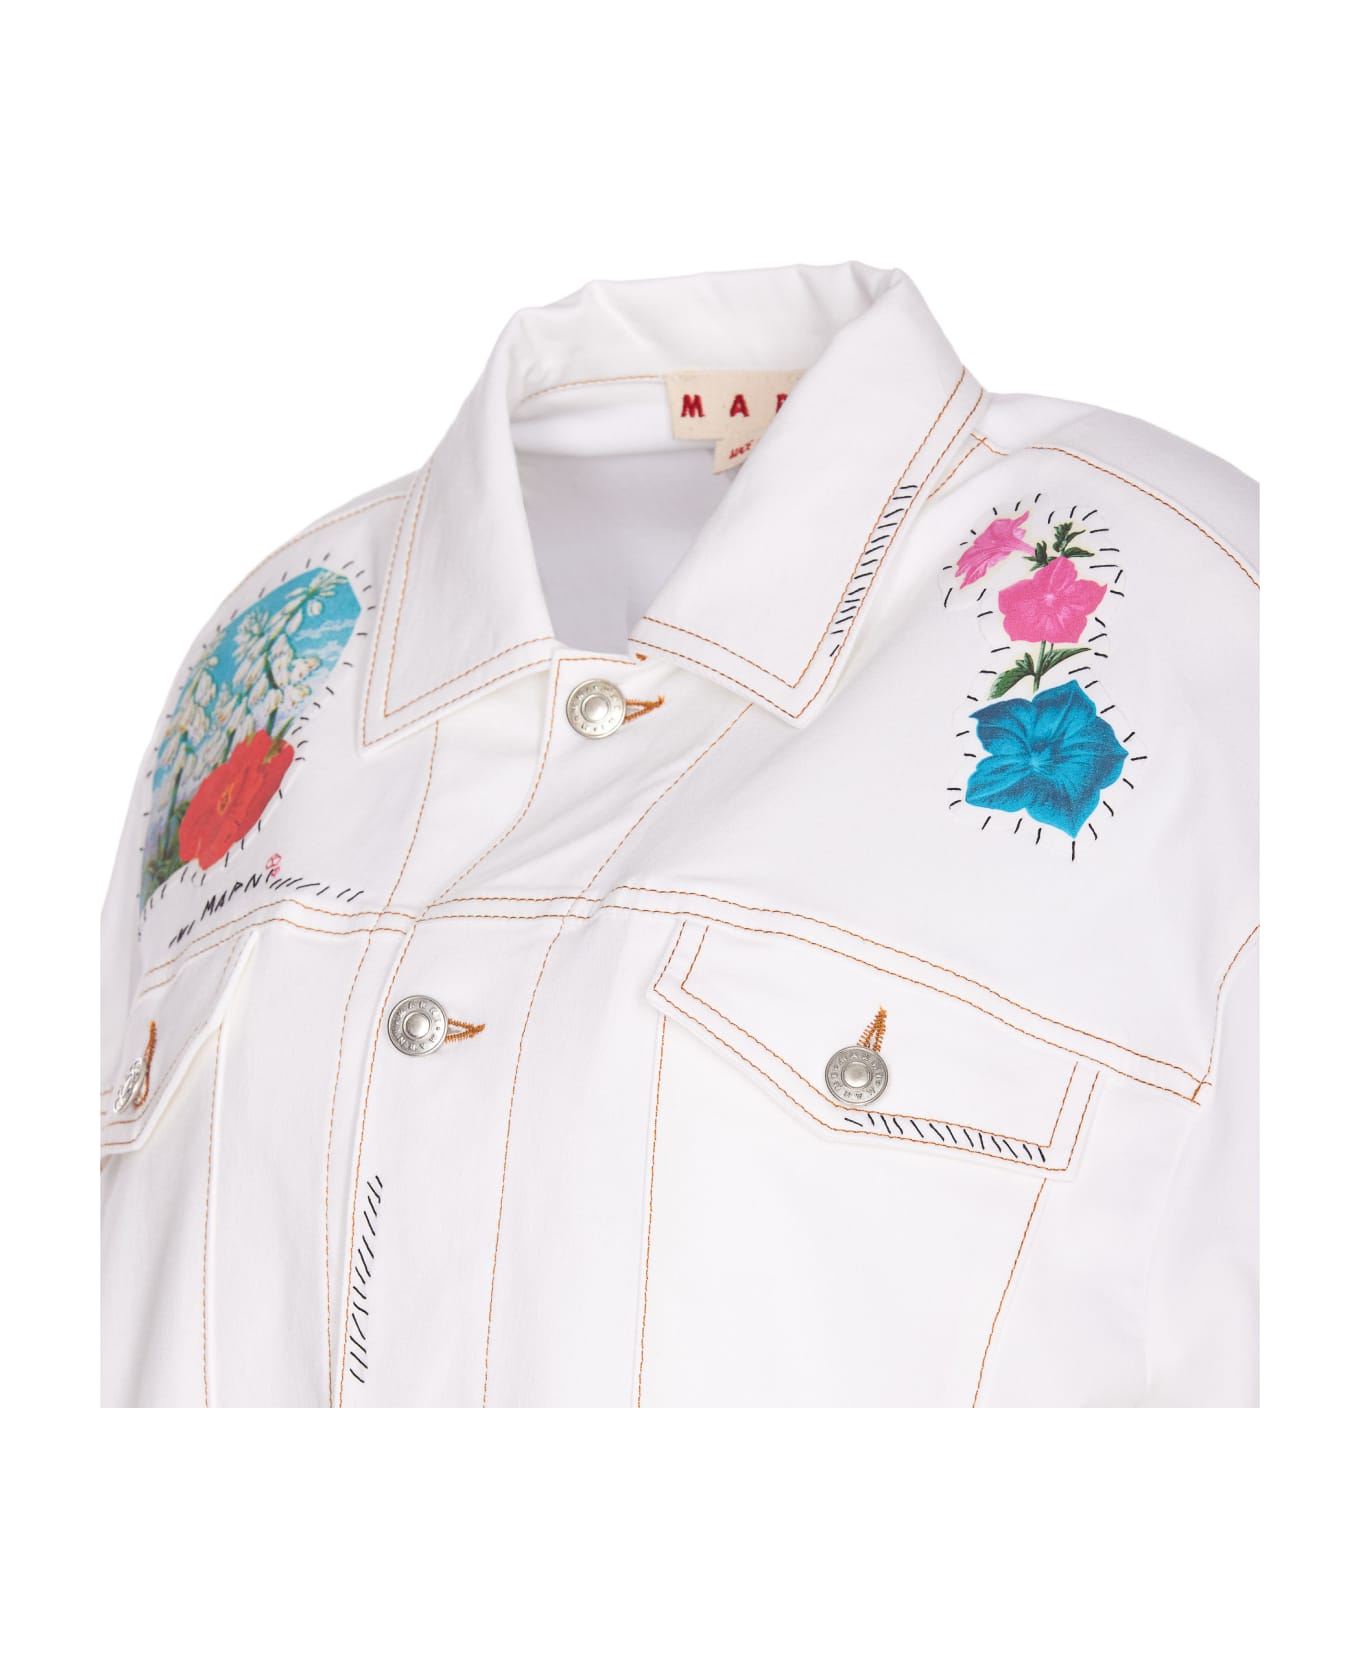 Marni Flower Print Jacket - White